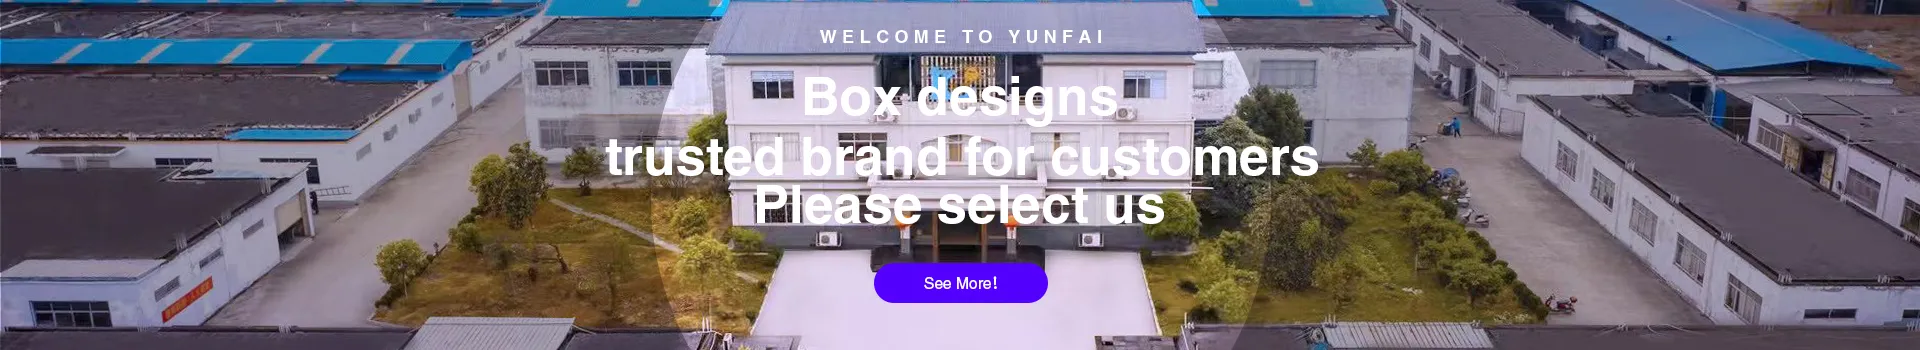 Yunfai Jewelry Boxes Manufactory